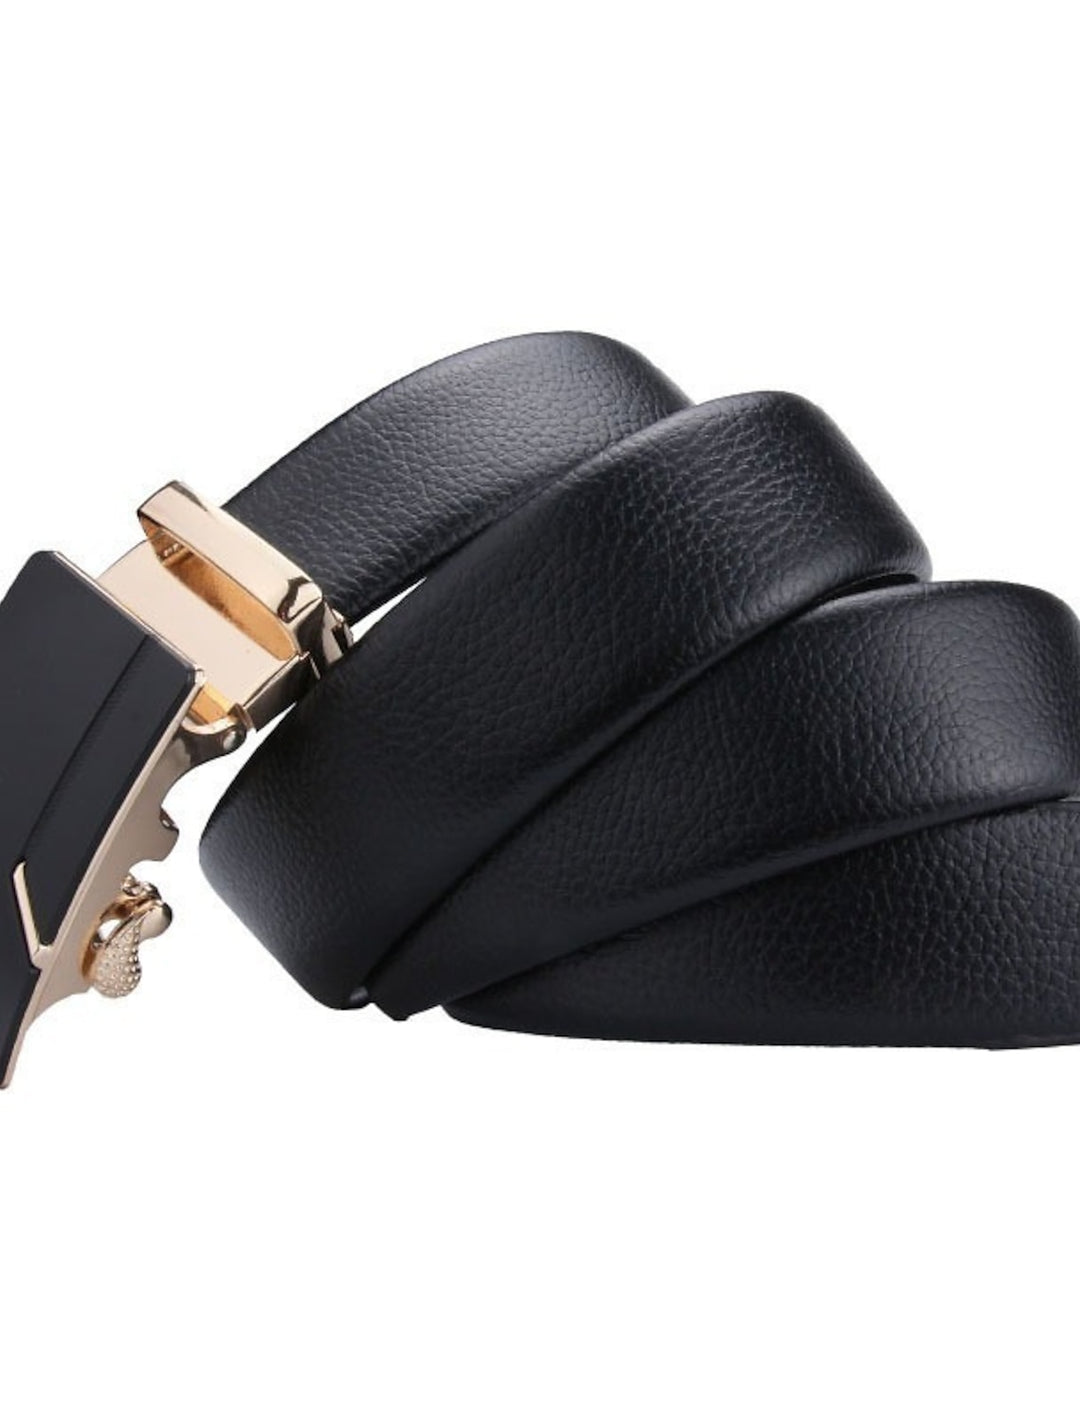 Men's Ratchet Black PU Leather Daily Wear Belt